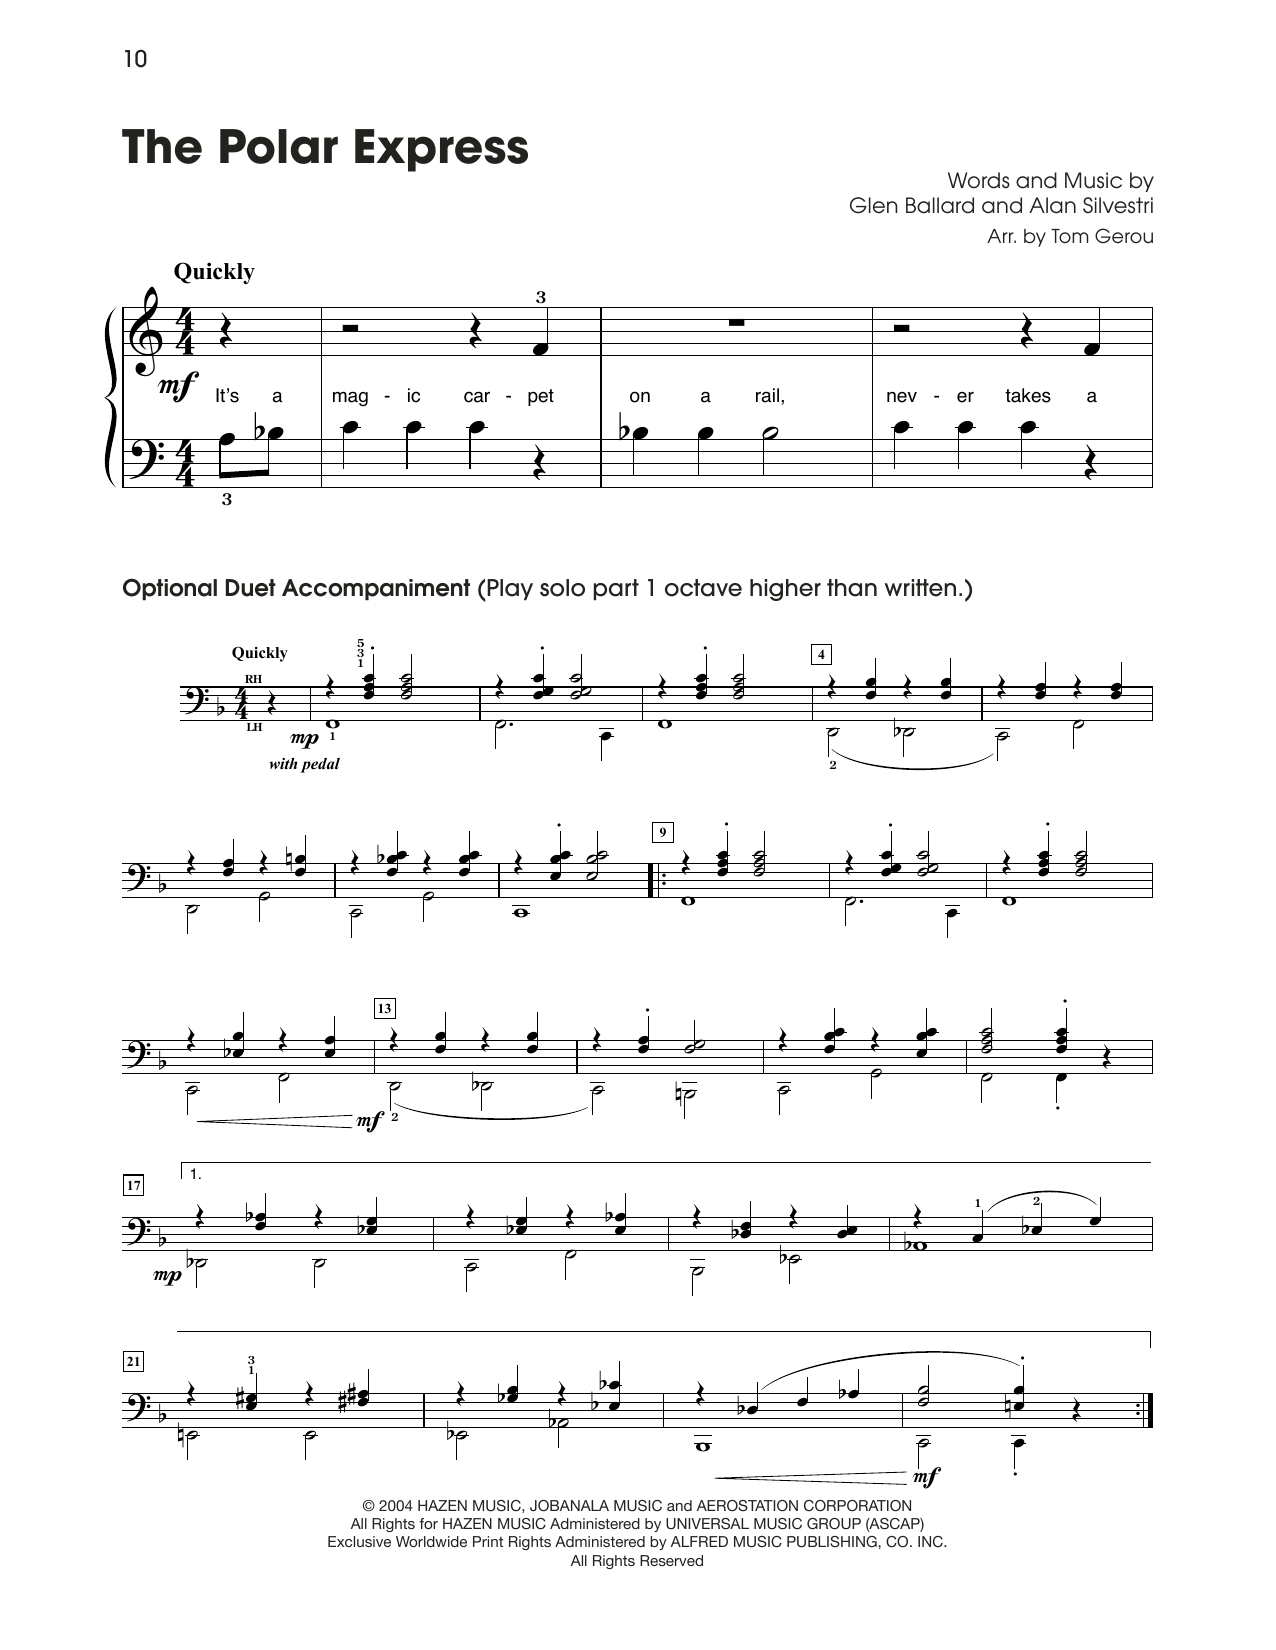 Alan Silvestri The Polar Express (arr. Tom Gerou) Sheet Music Notes & Chords for 5-Finger Piano - Download or Print PDF